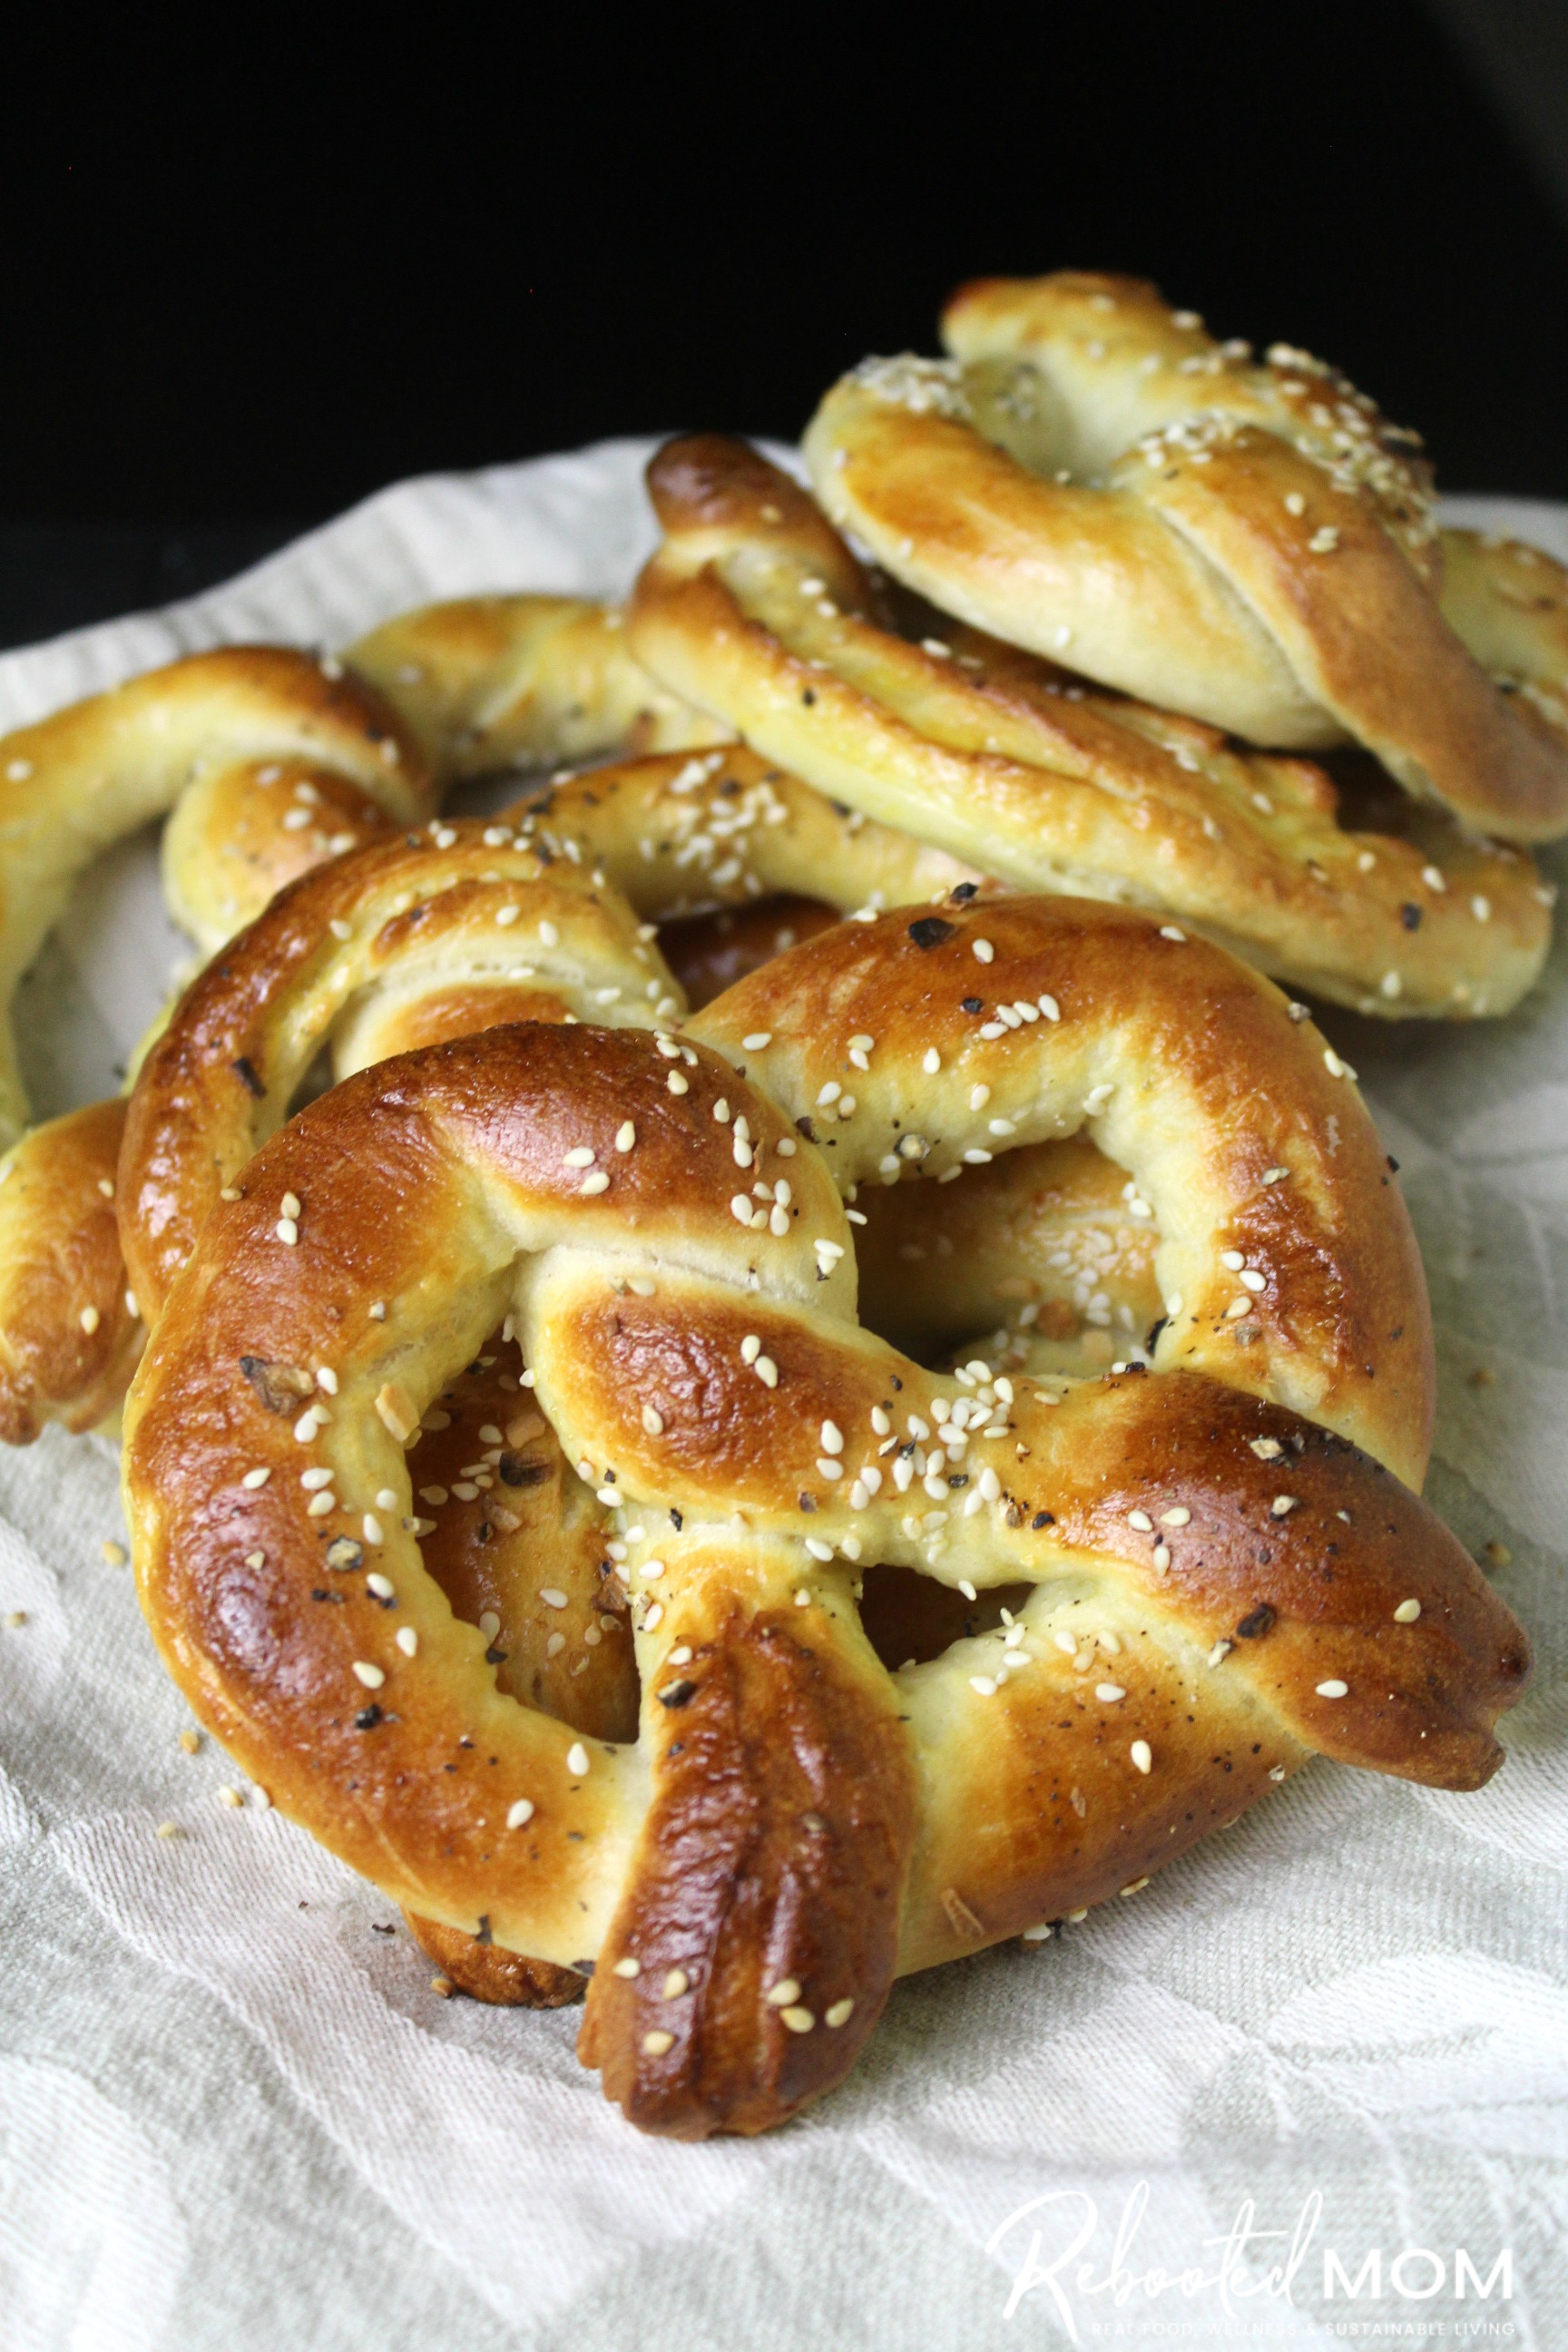 Yum - fresh sourdough pretzels warm from the oven!